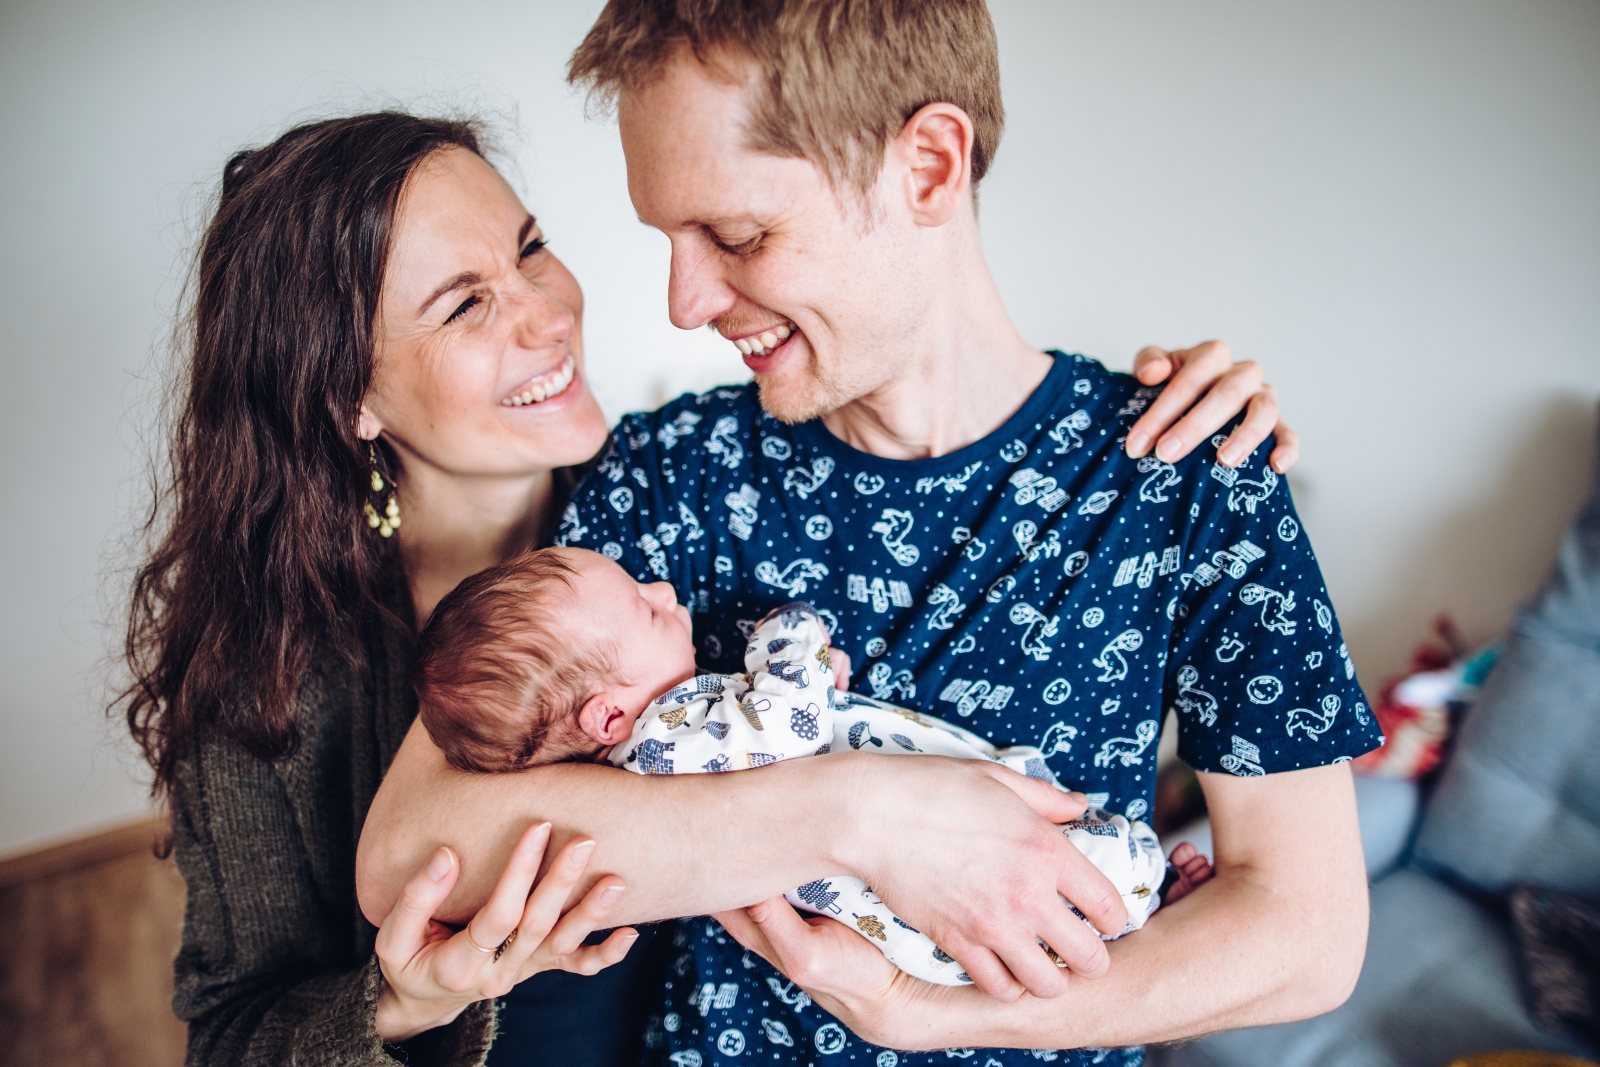 Rodinné newborn focení s malým miminkem 14 dní po porodu